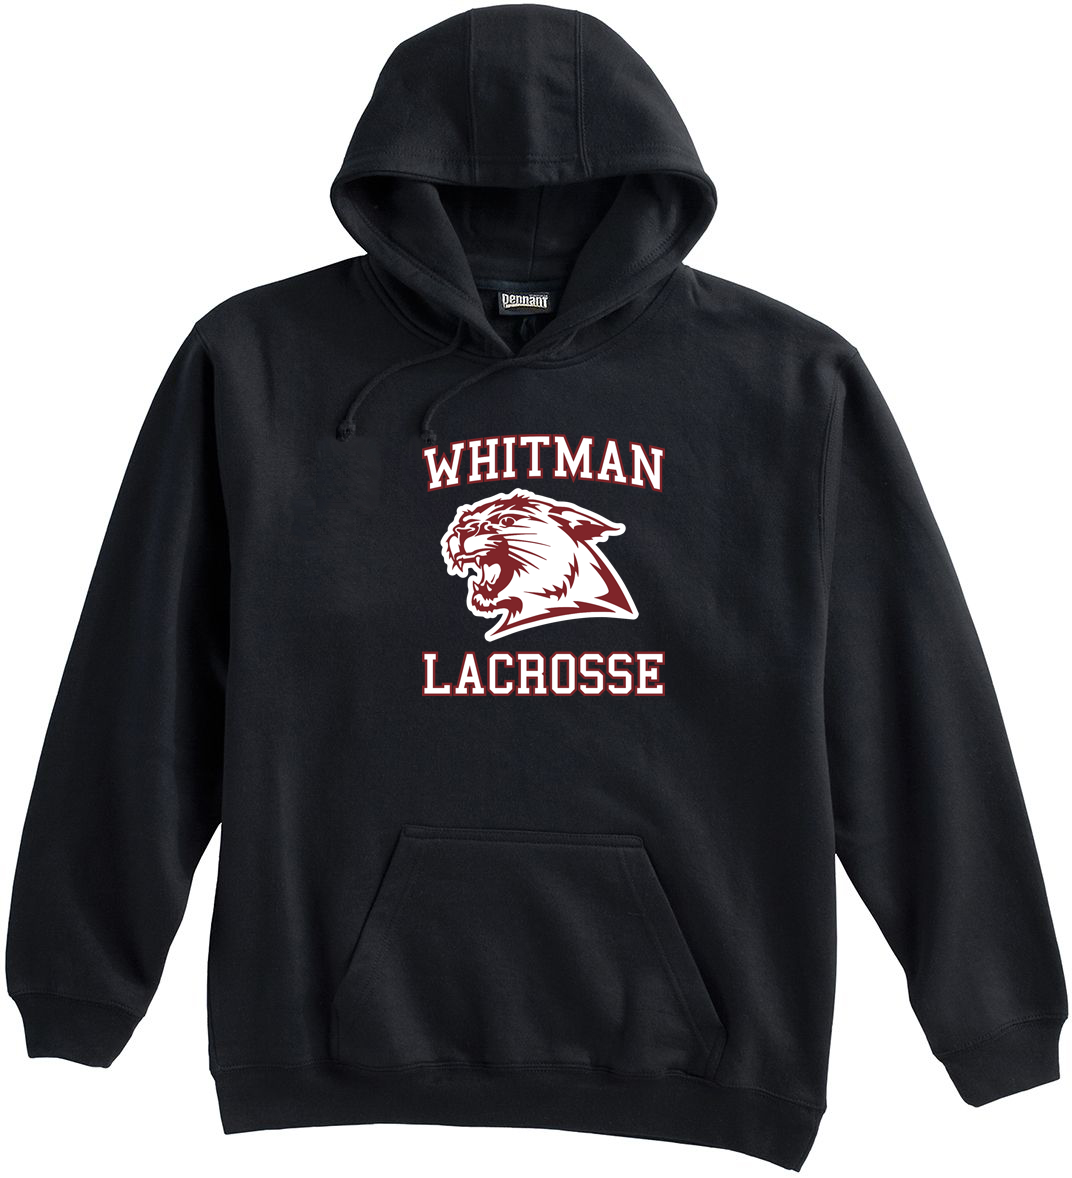 Whitman Lacrosse Black Sweatshirt